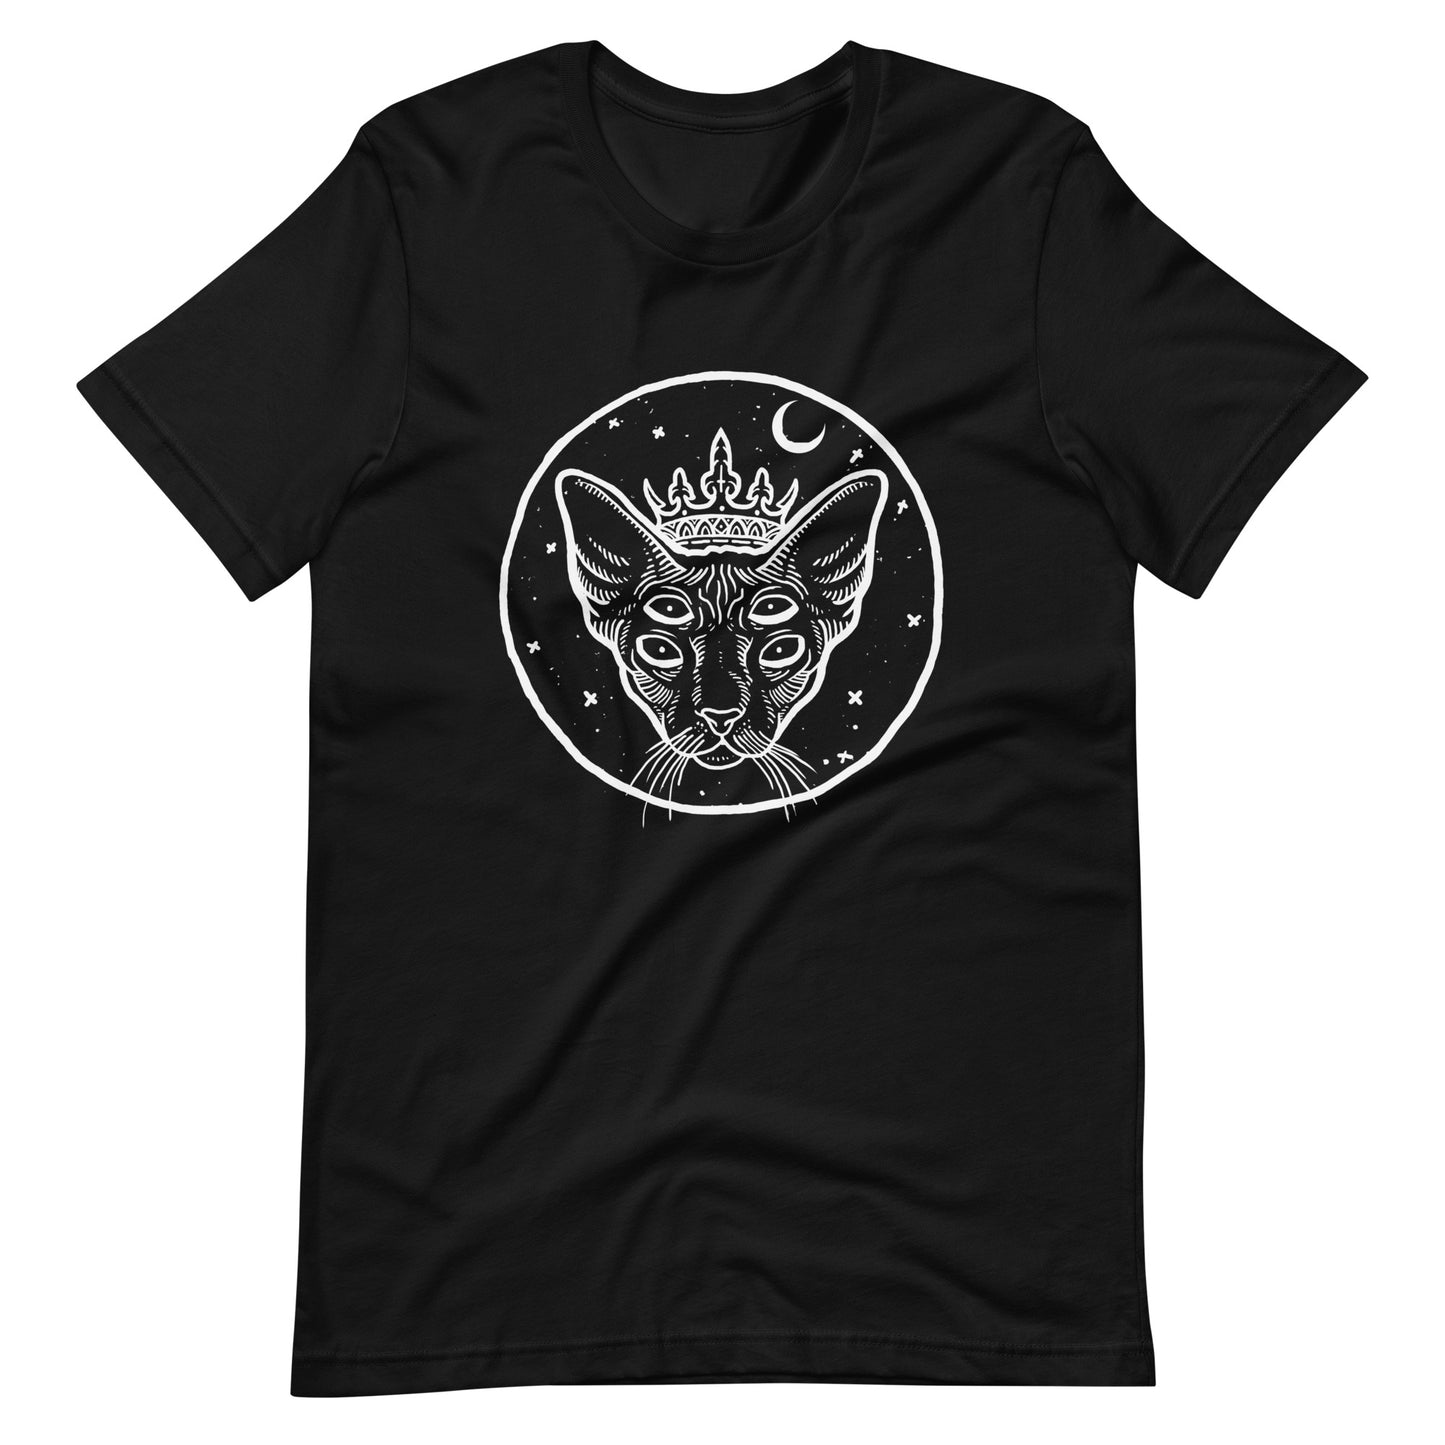 The Ruler - Men's t-shirt - Black Front